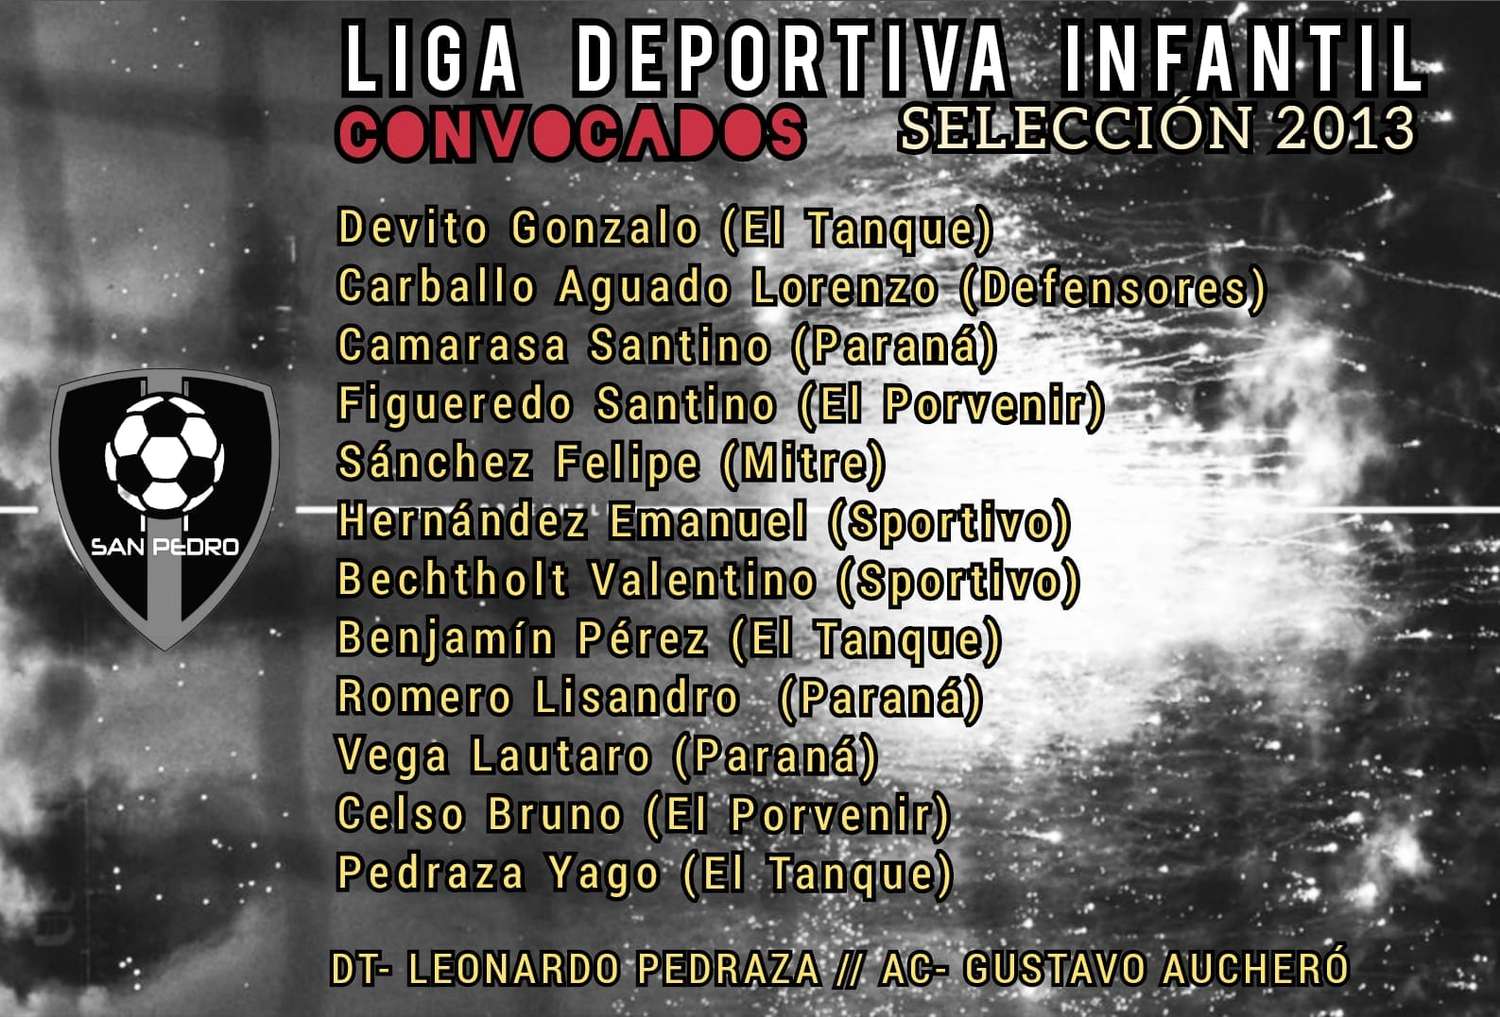 Lista de convocados seleccion 2013 futbol infantil